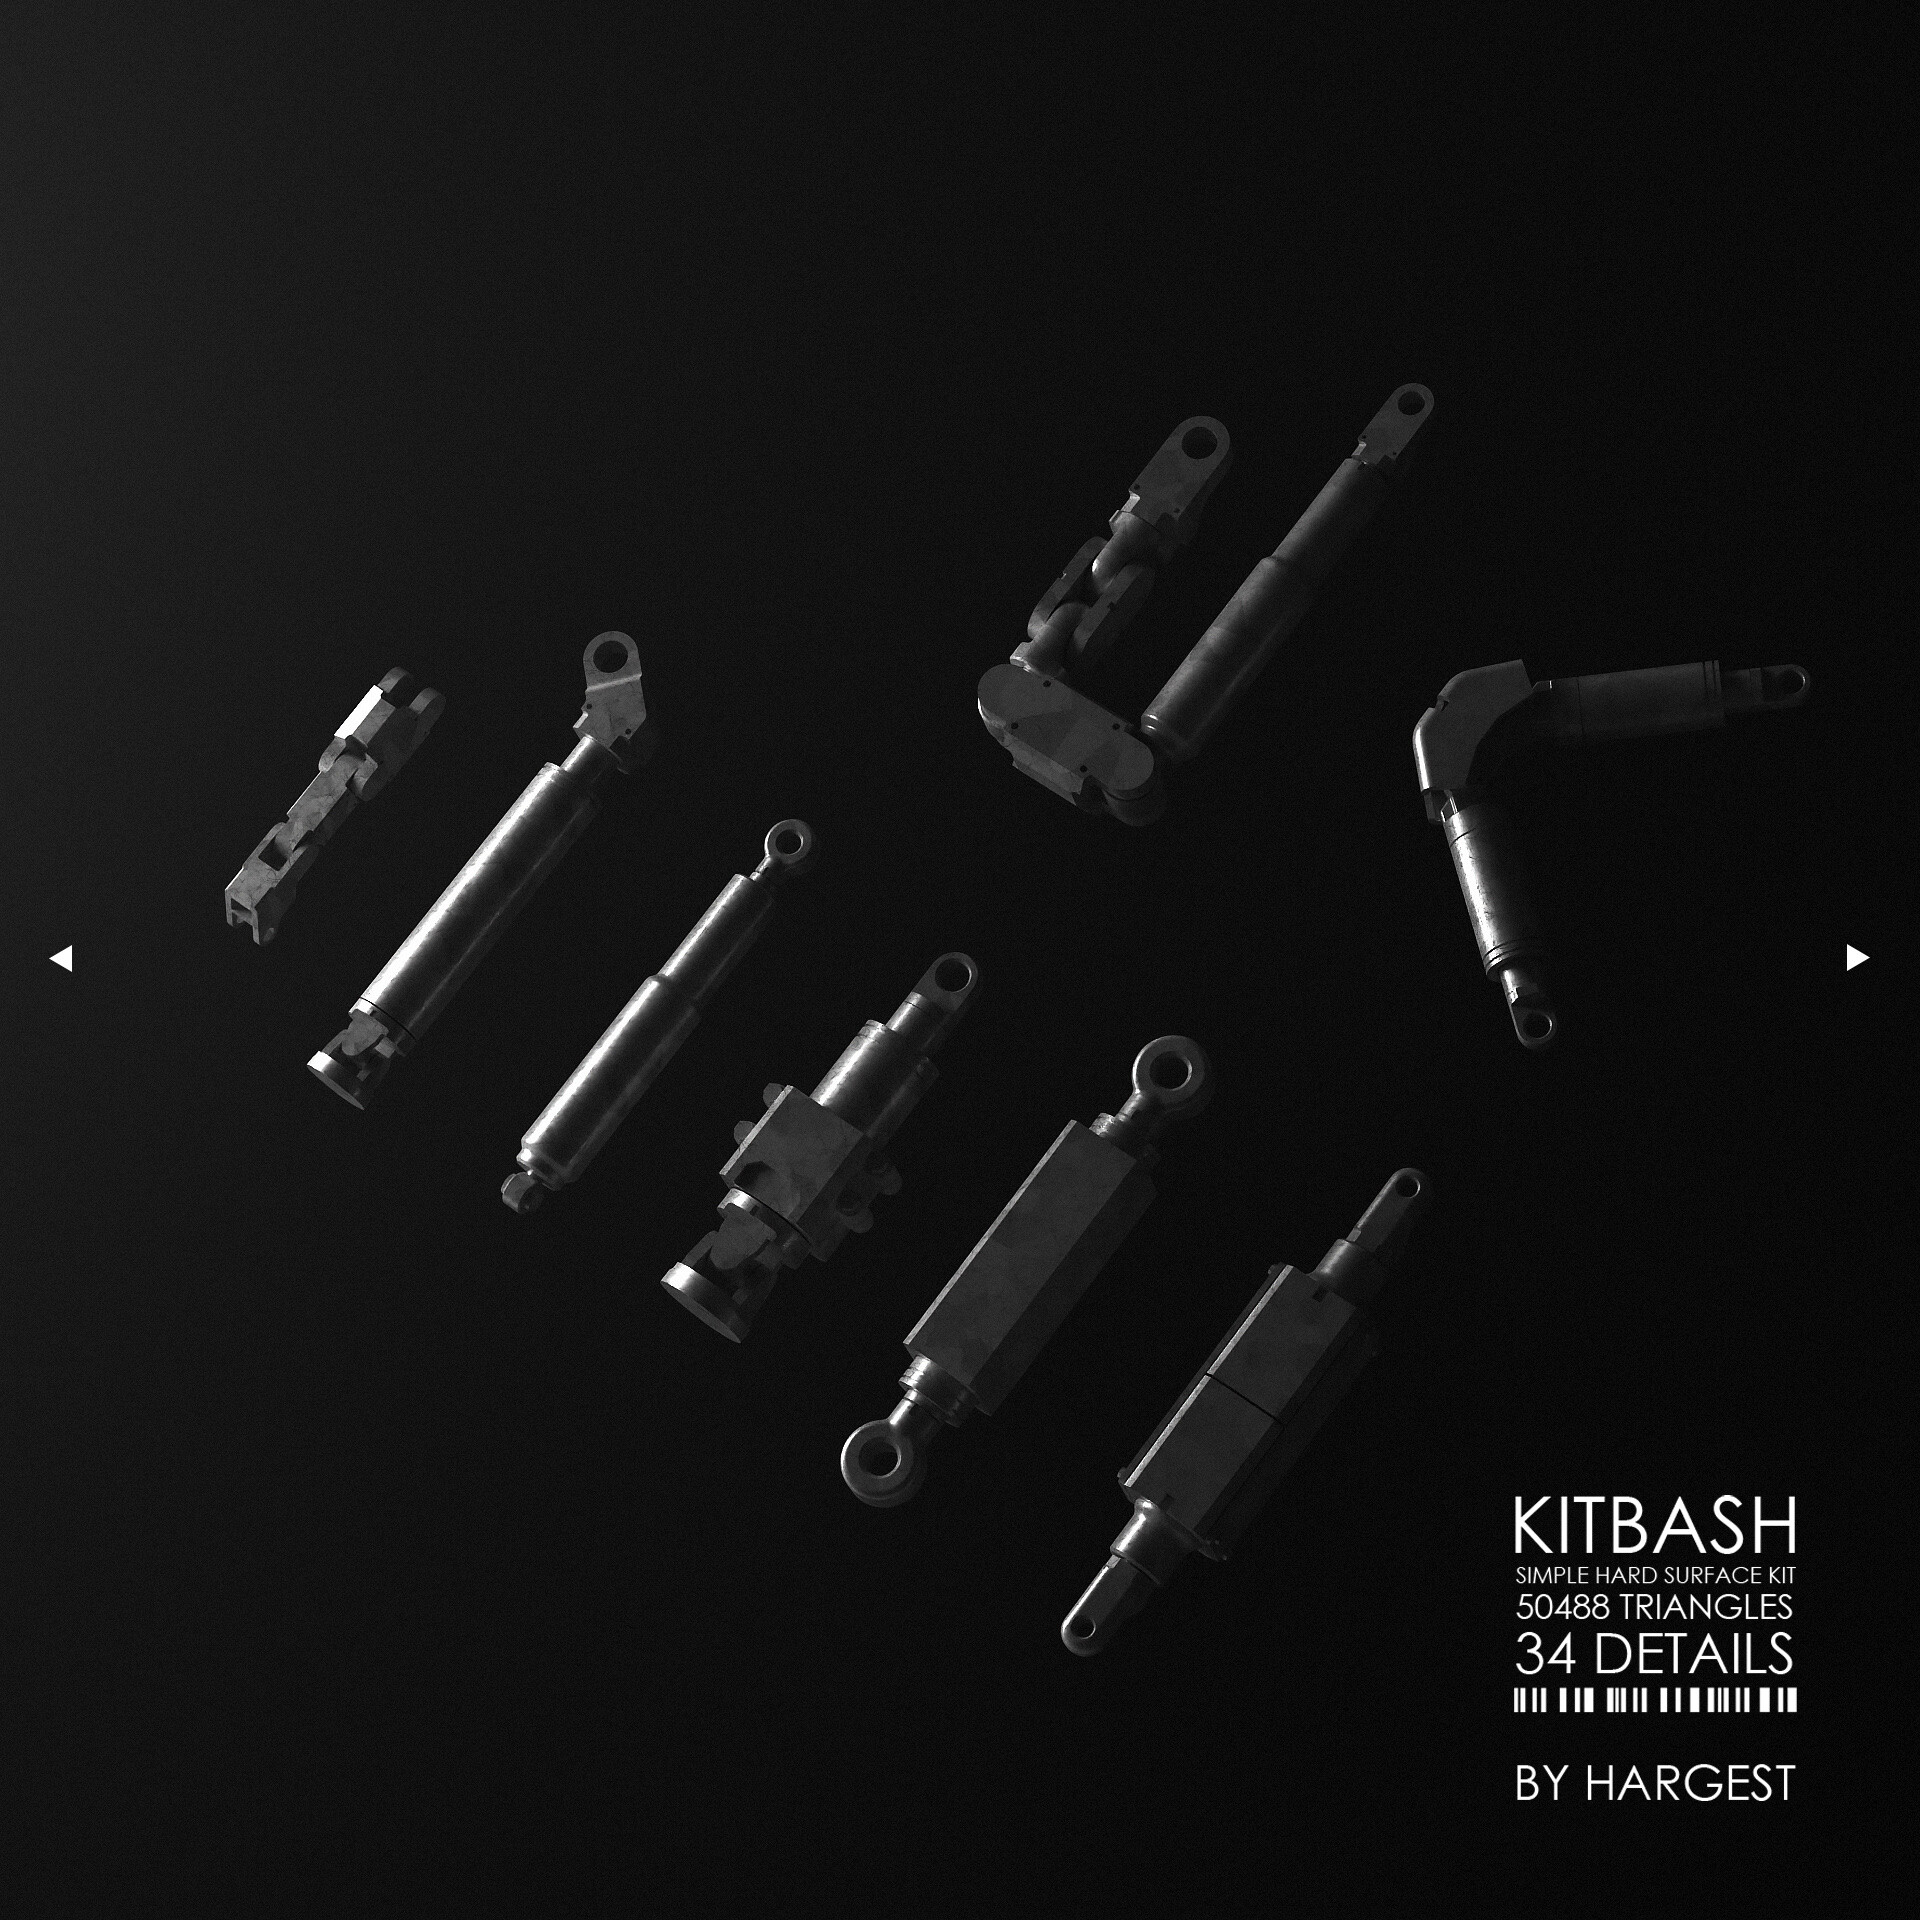 ArtStation - kitbash